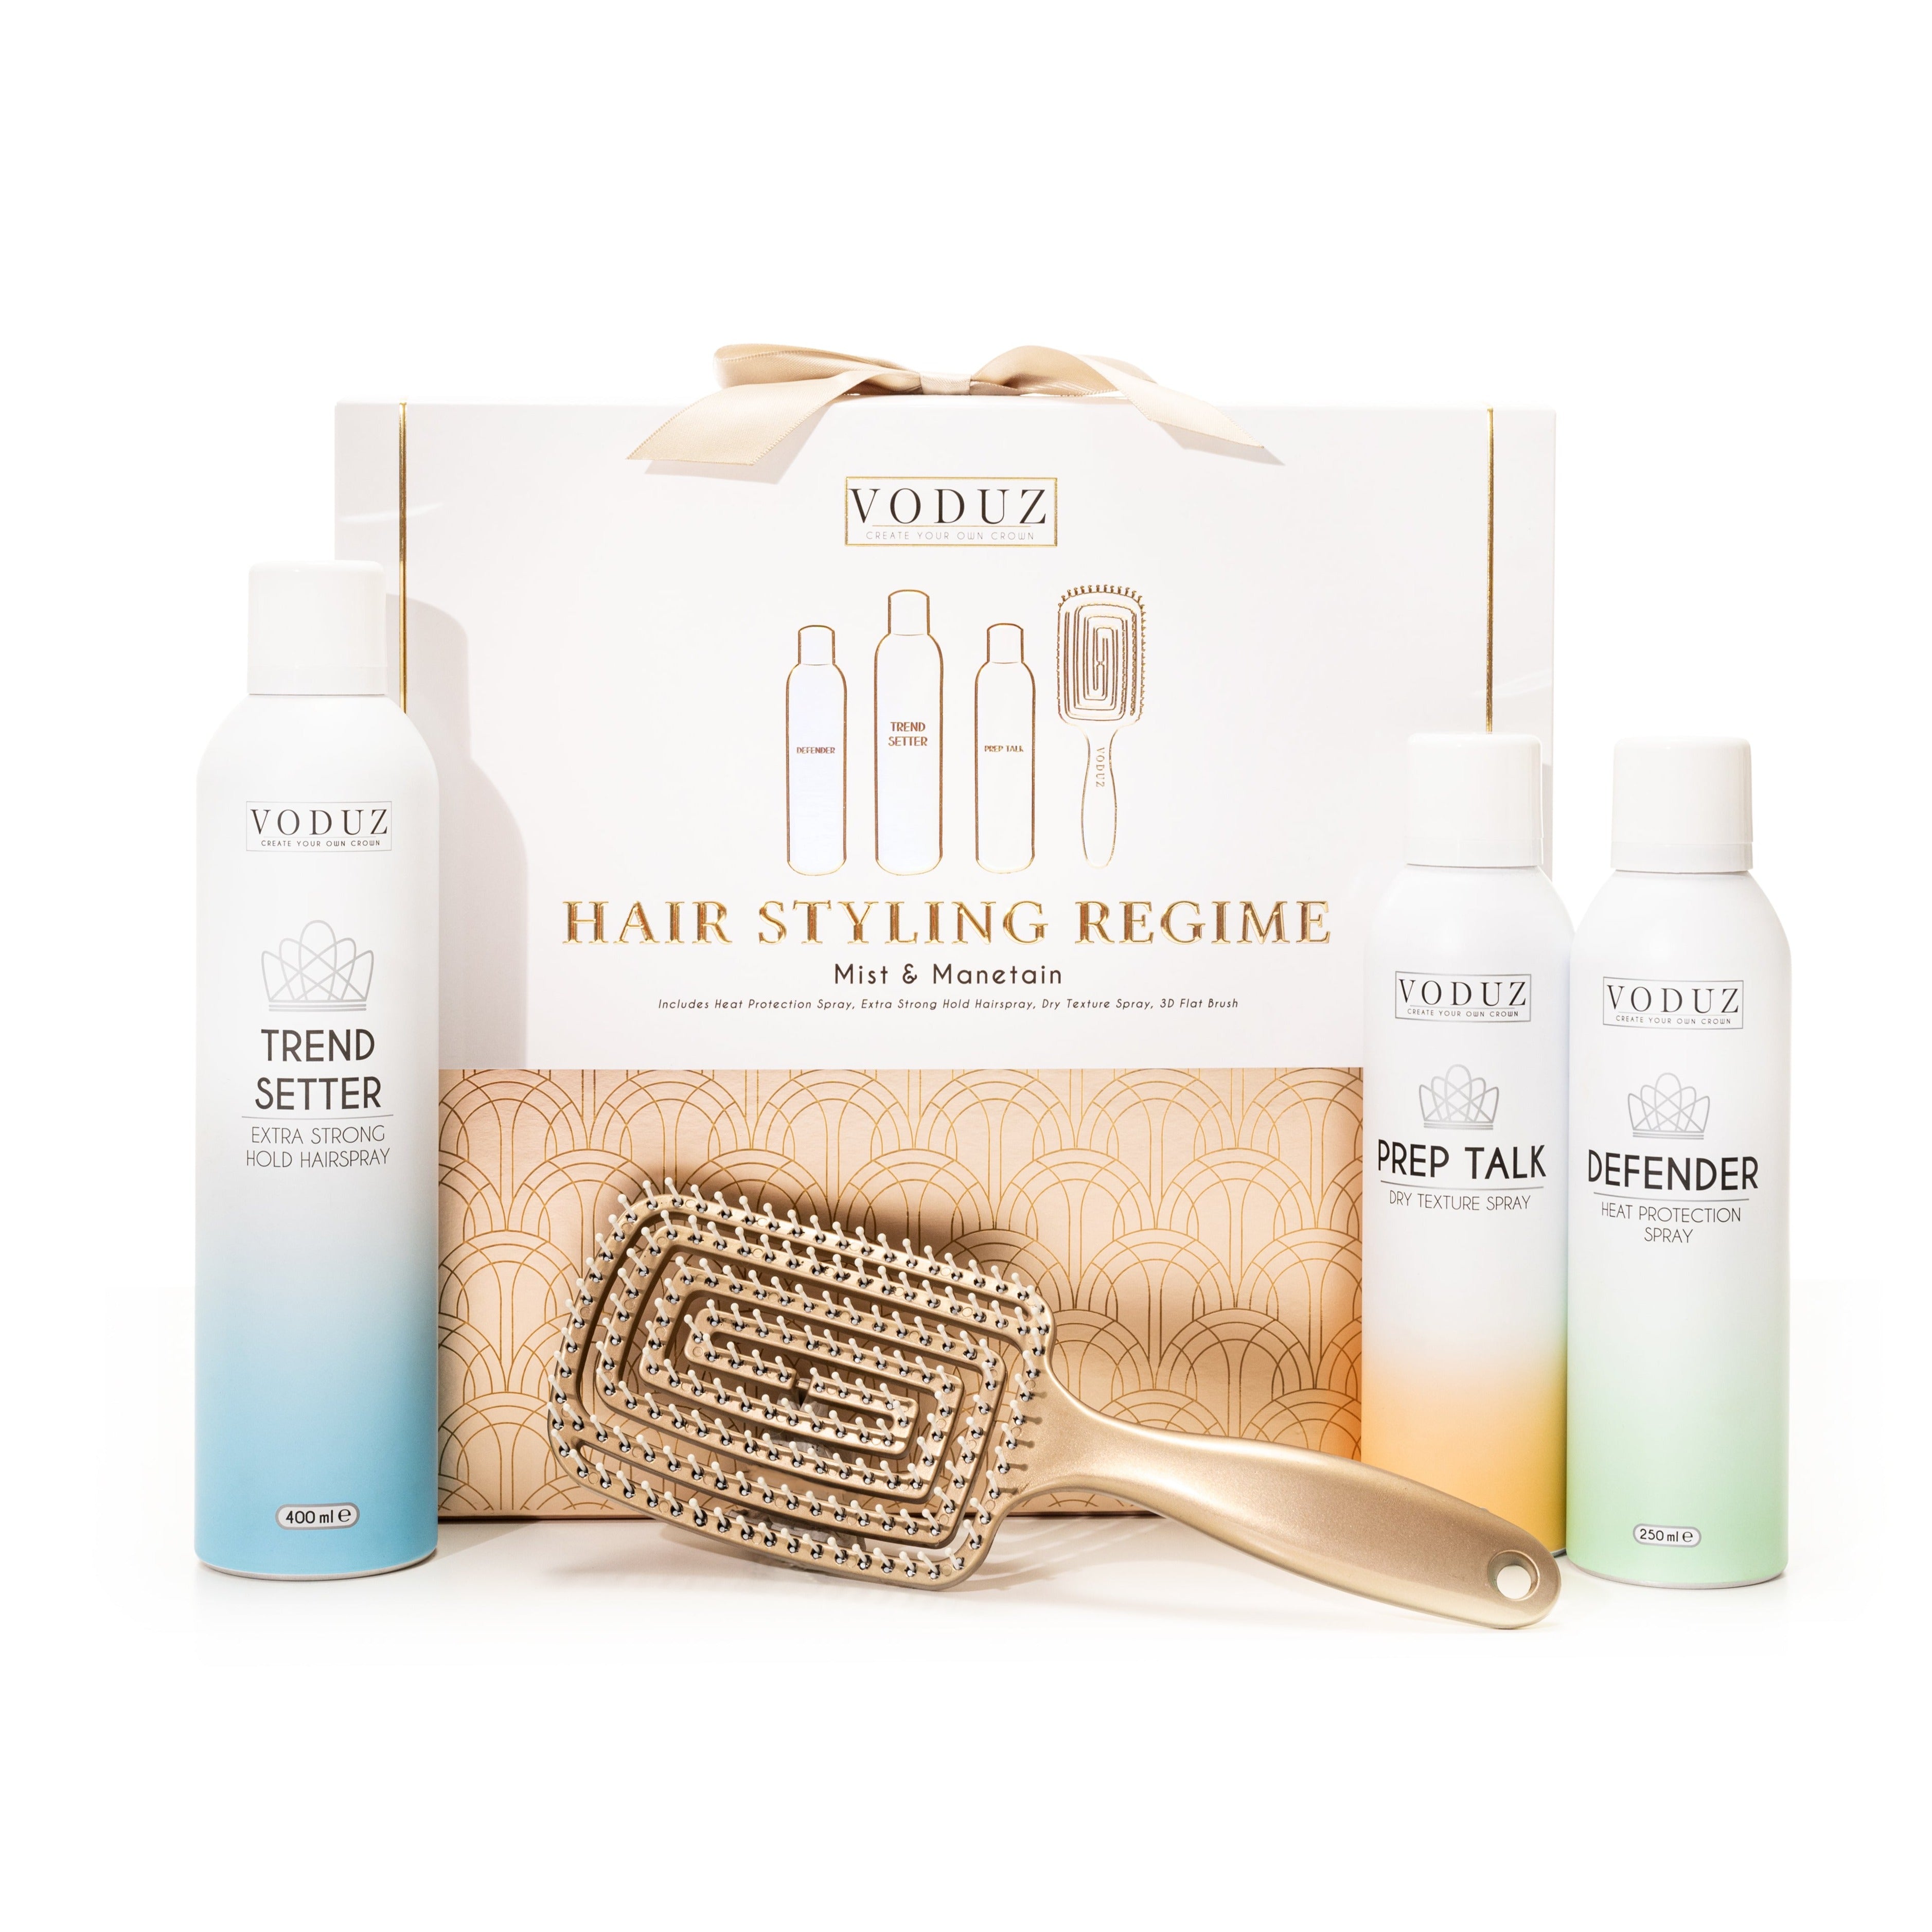 Voduz Mist & Manetane - Hair Styling Regime, open with products displayed